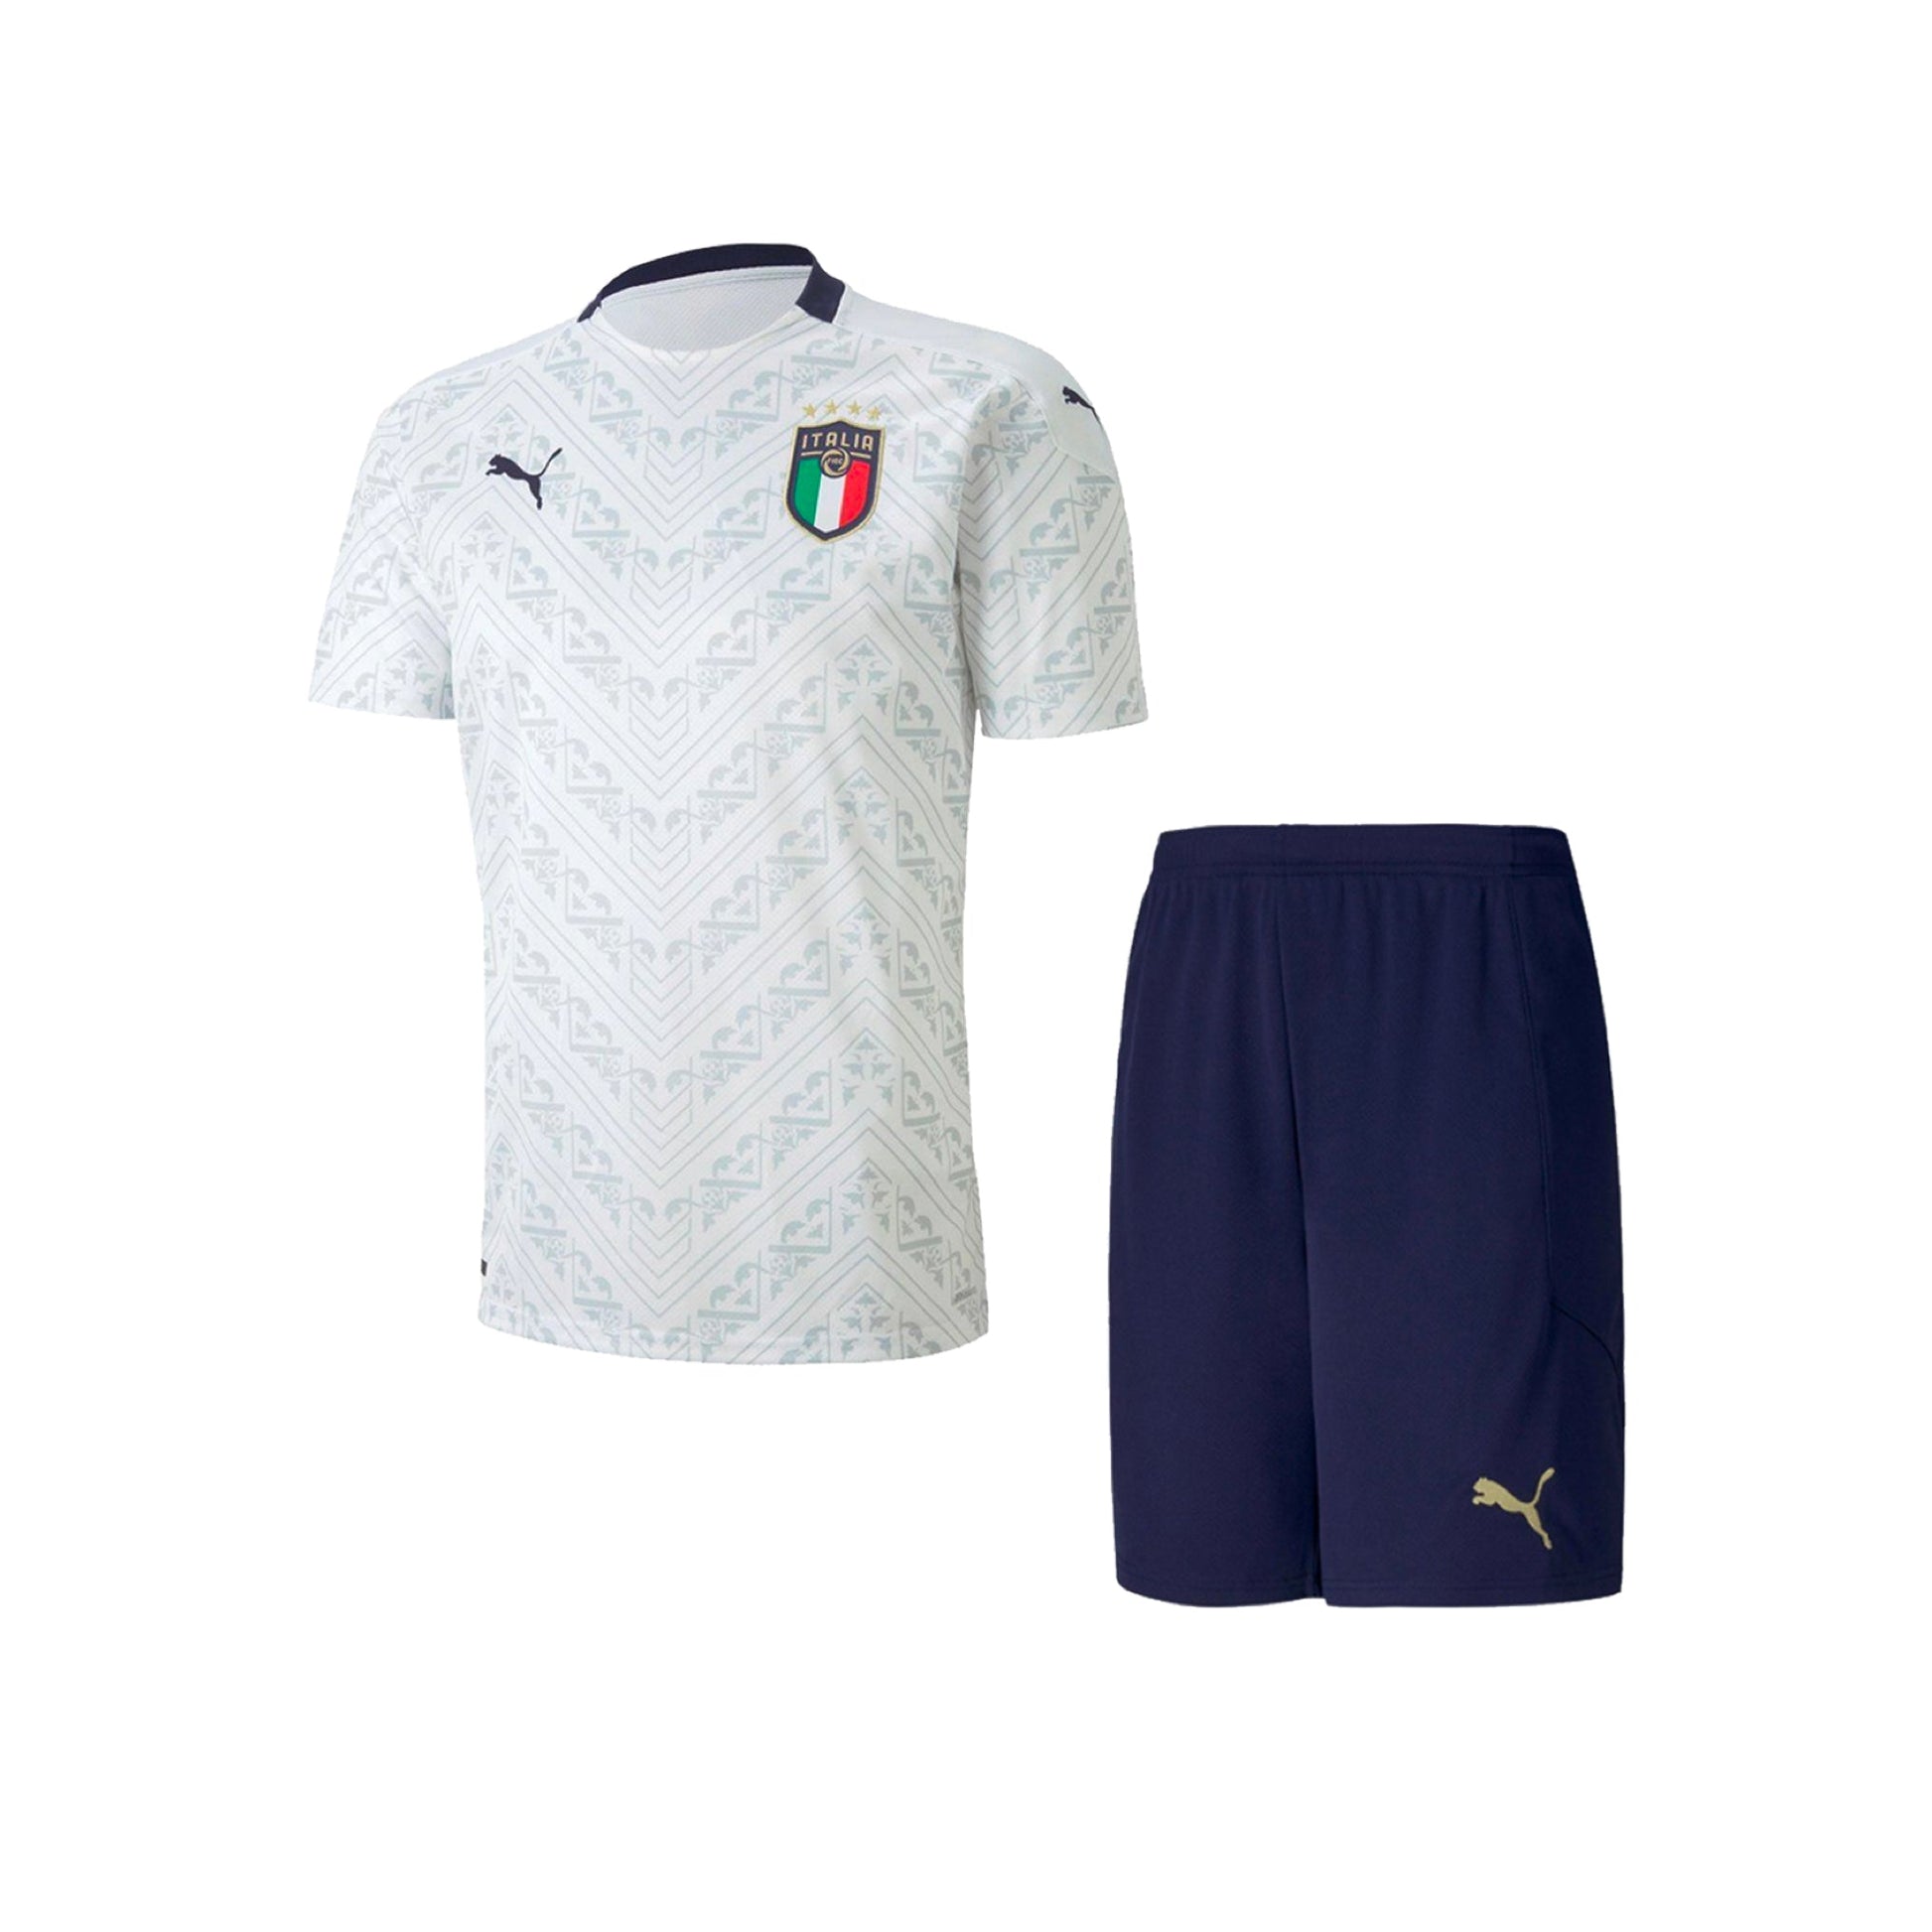 Italy Third Jersey, Italy Euro 20/21 Third Kit